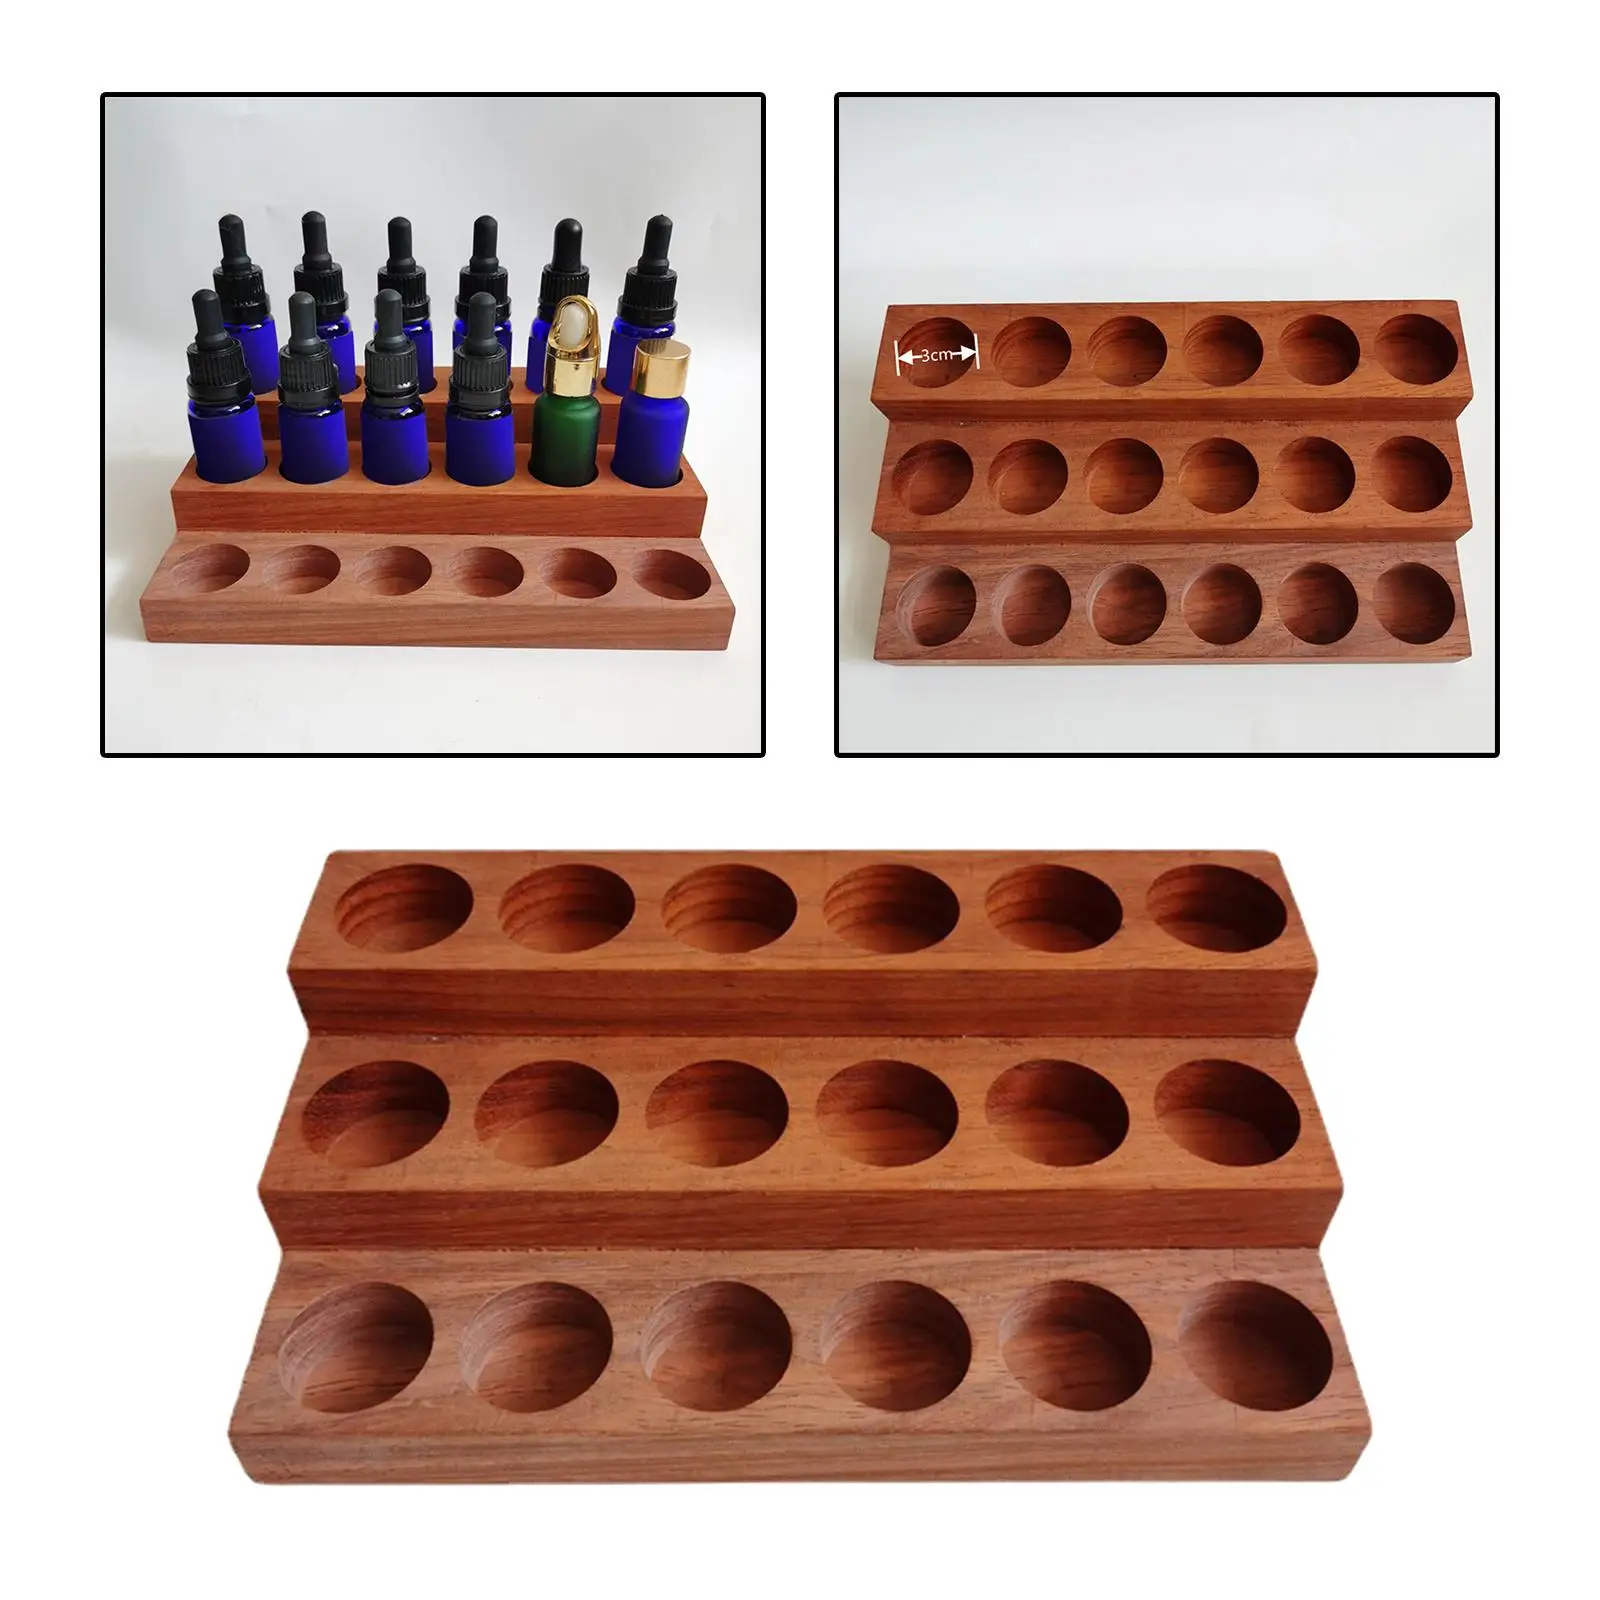 Essential Oils Storage Rack 18 Slots Wooden 3 Tiers for 15ml Bottles Gift Display Holder Organizer for Presentation Tabletop